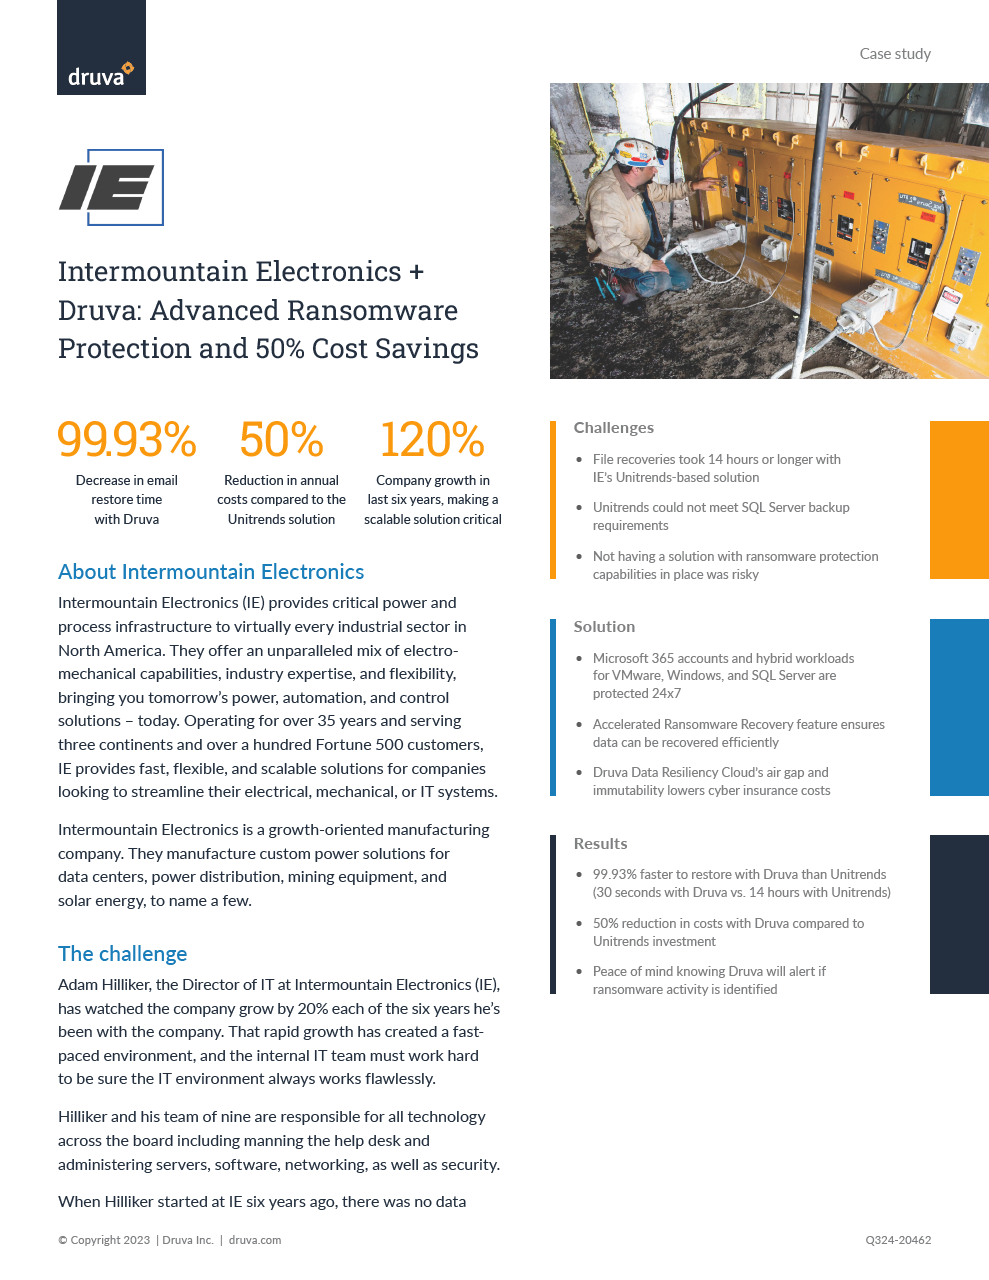 Intermountain Electronics + Druva: Advanced Ransomware Protection and 50% Cost Savings